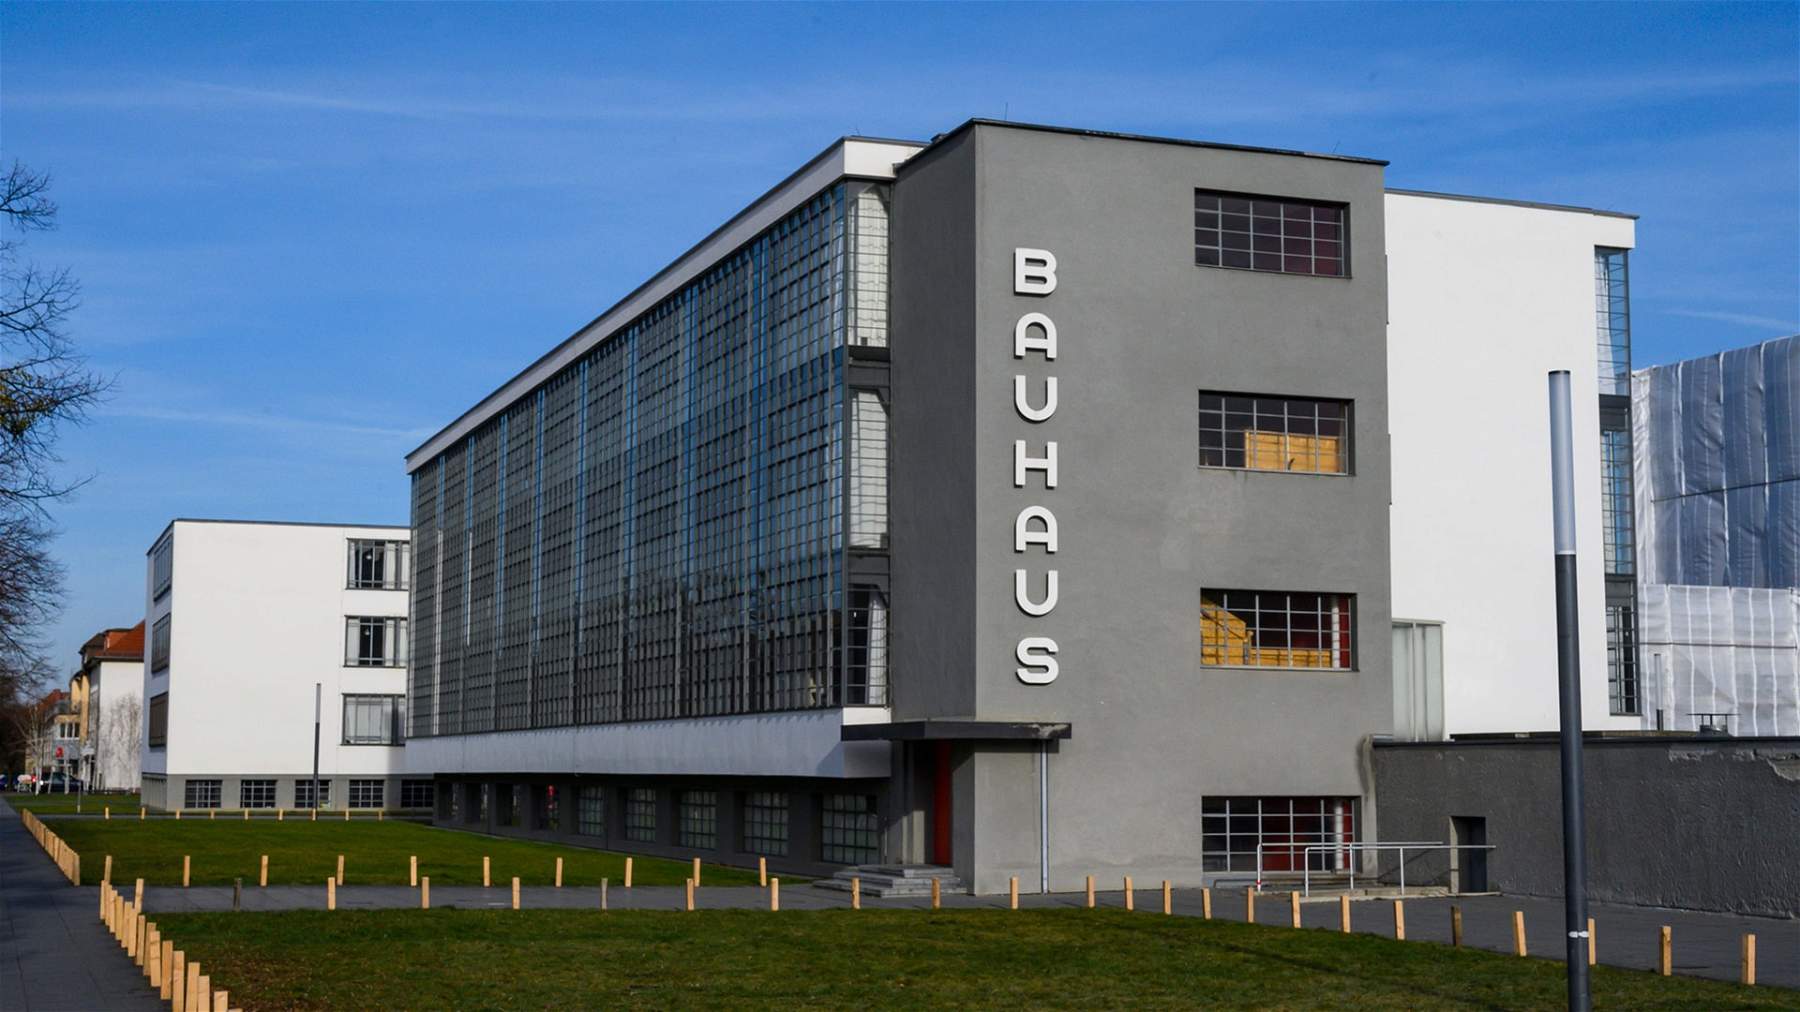 Rai5 dedica un'intera serata al Bauhaus con due documentari 